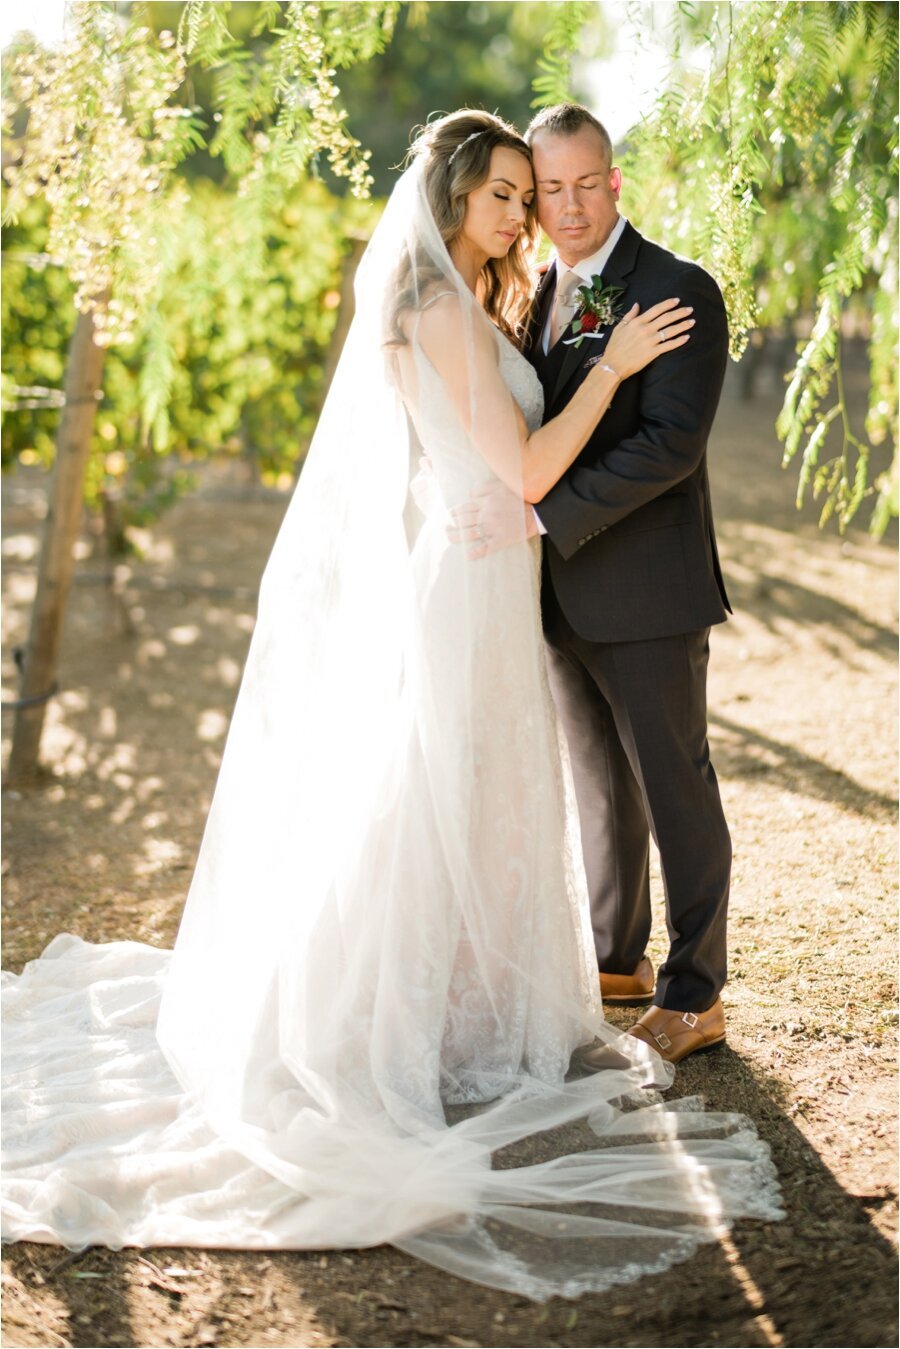 Epona Estate bride and groom portraits in vineyard